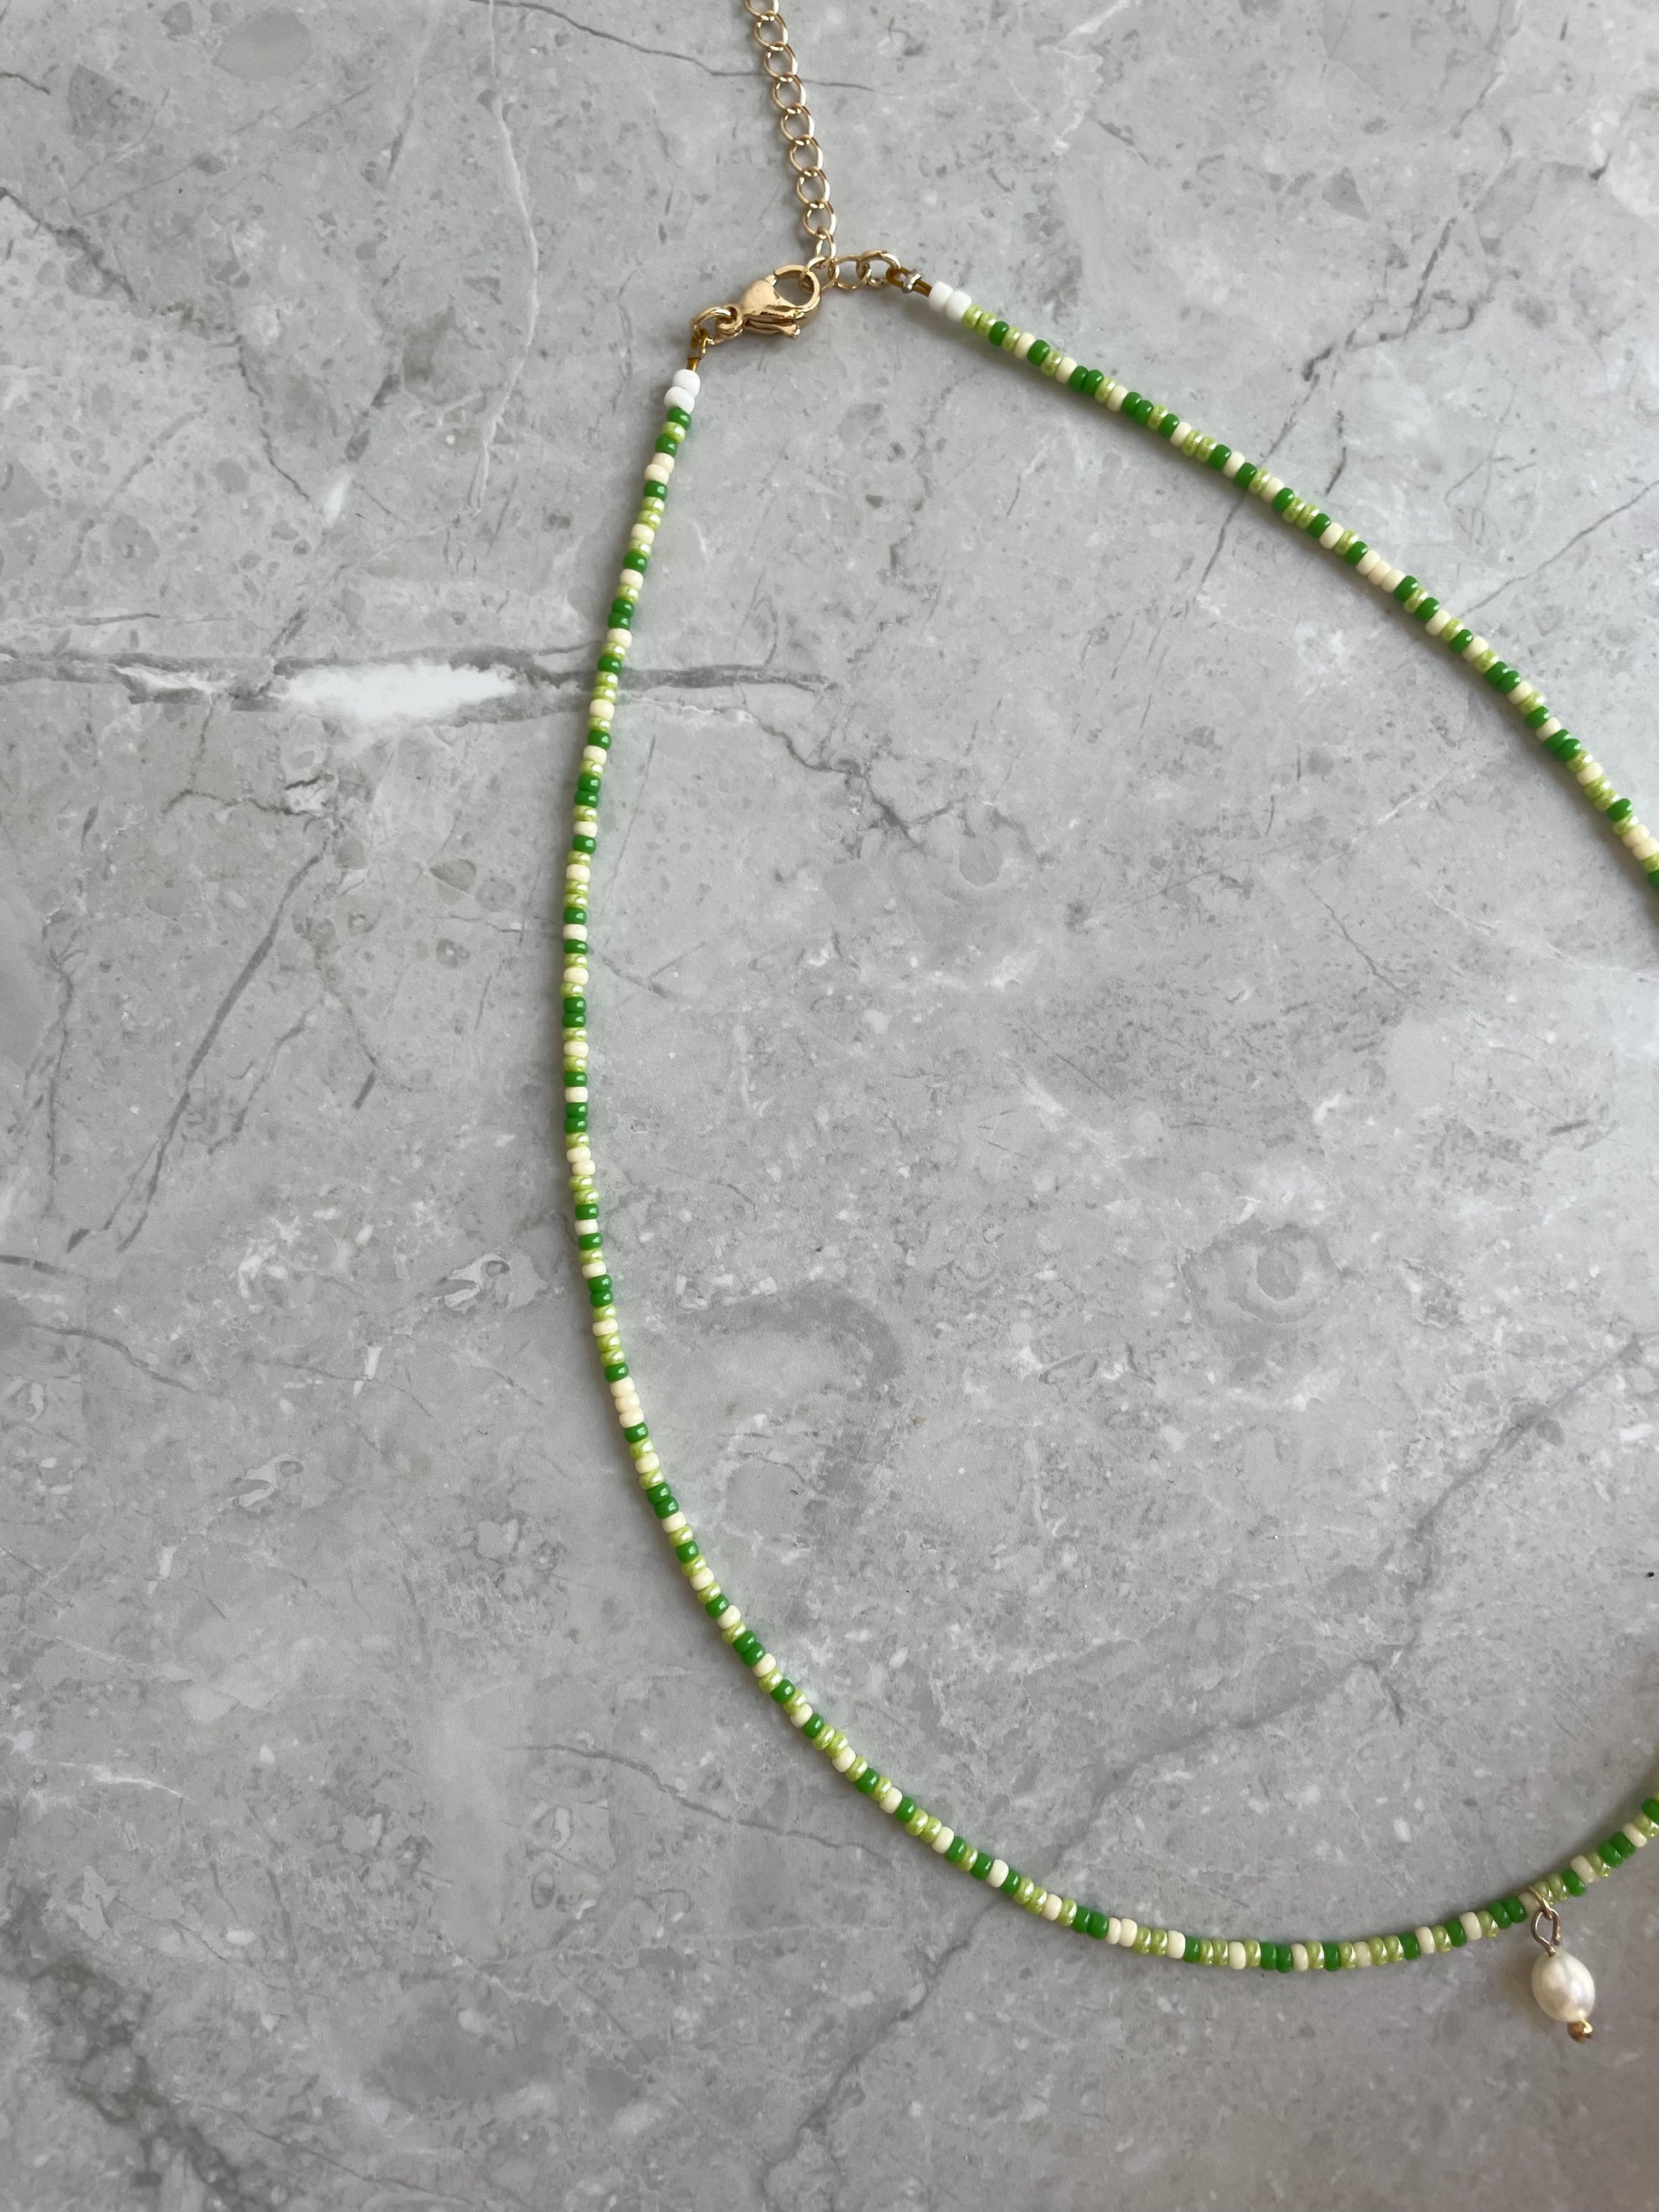 aloe necklace. handmade, Japanese beads, water resistant jewellery, freshwater pearls